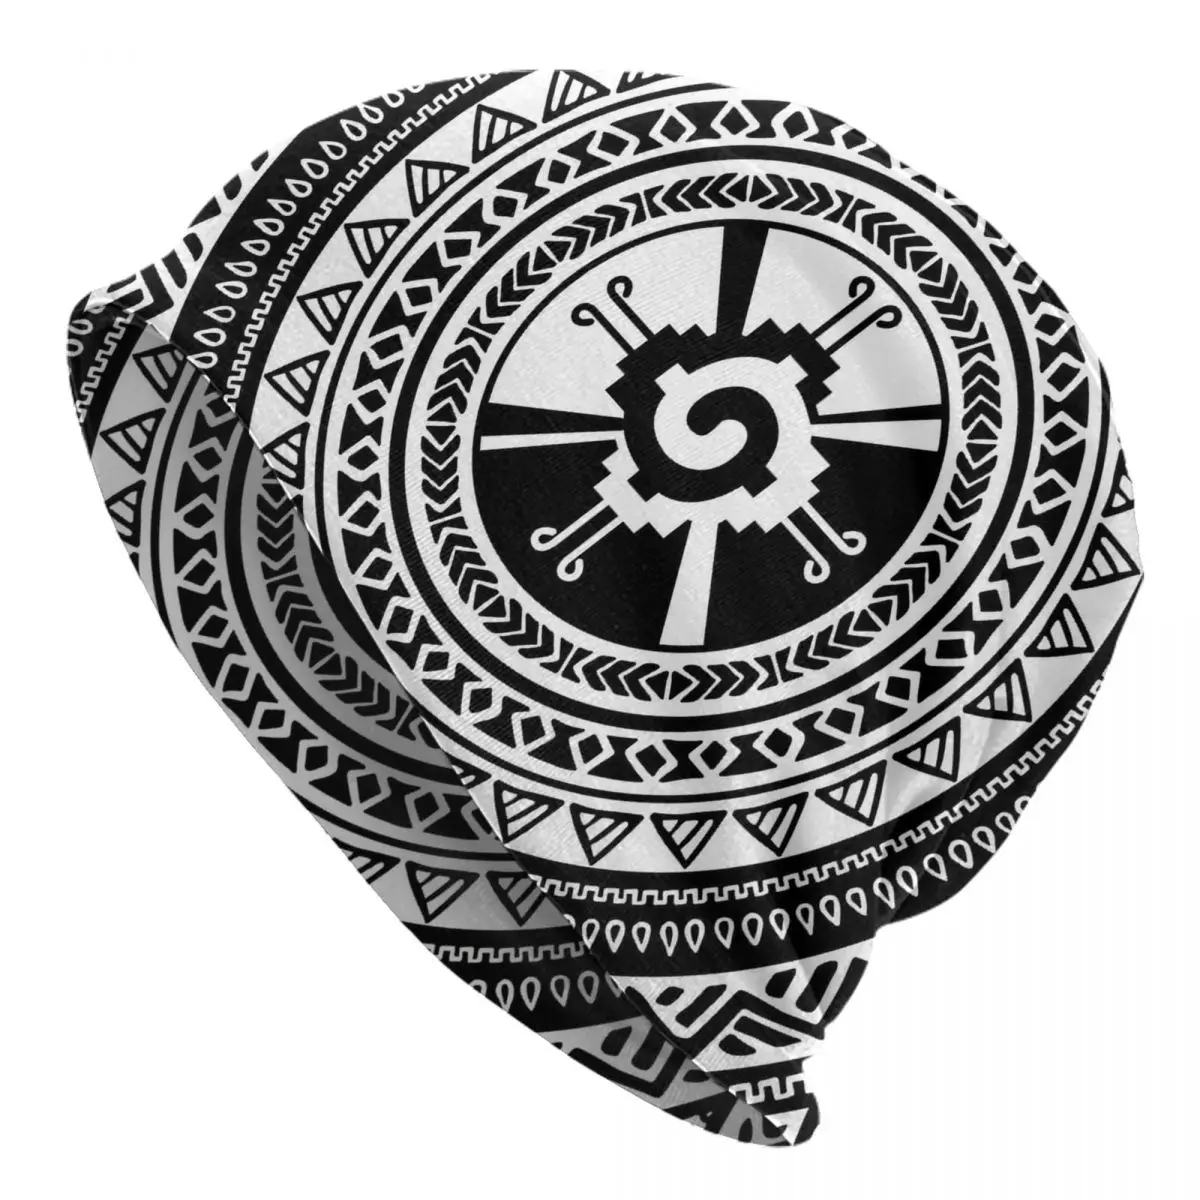 Hunab Ku Mayan Symbol Black And White Adult Men's Women's Knit Hat Keep warm winter knitted hat